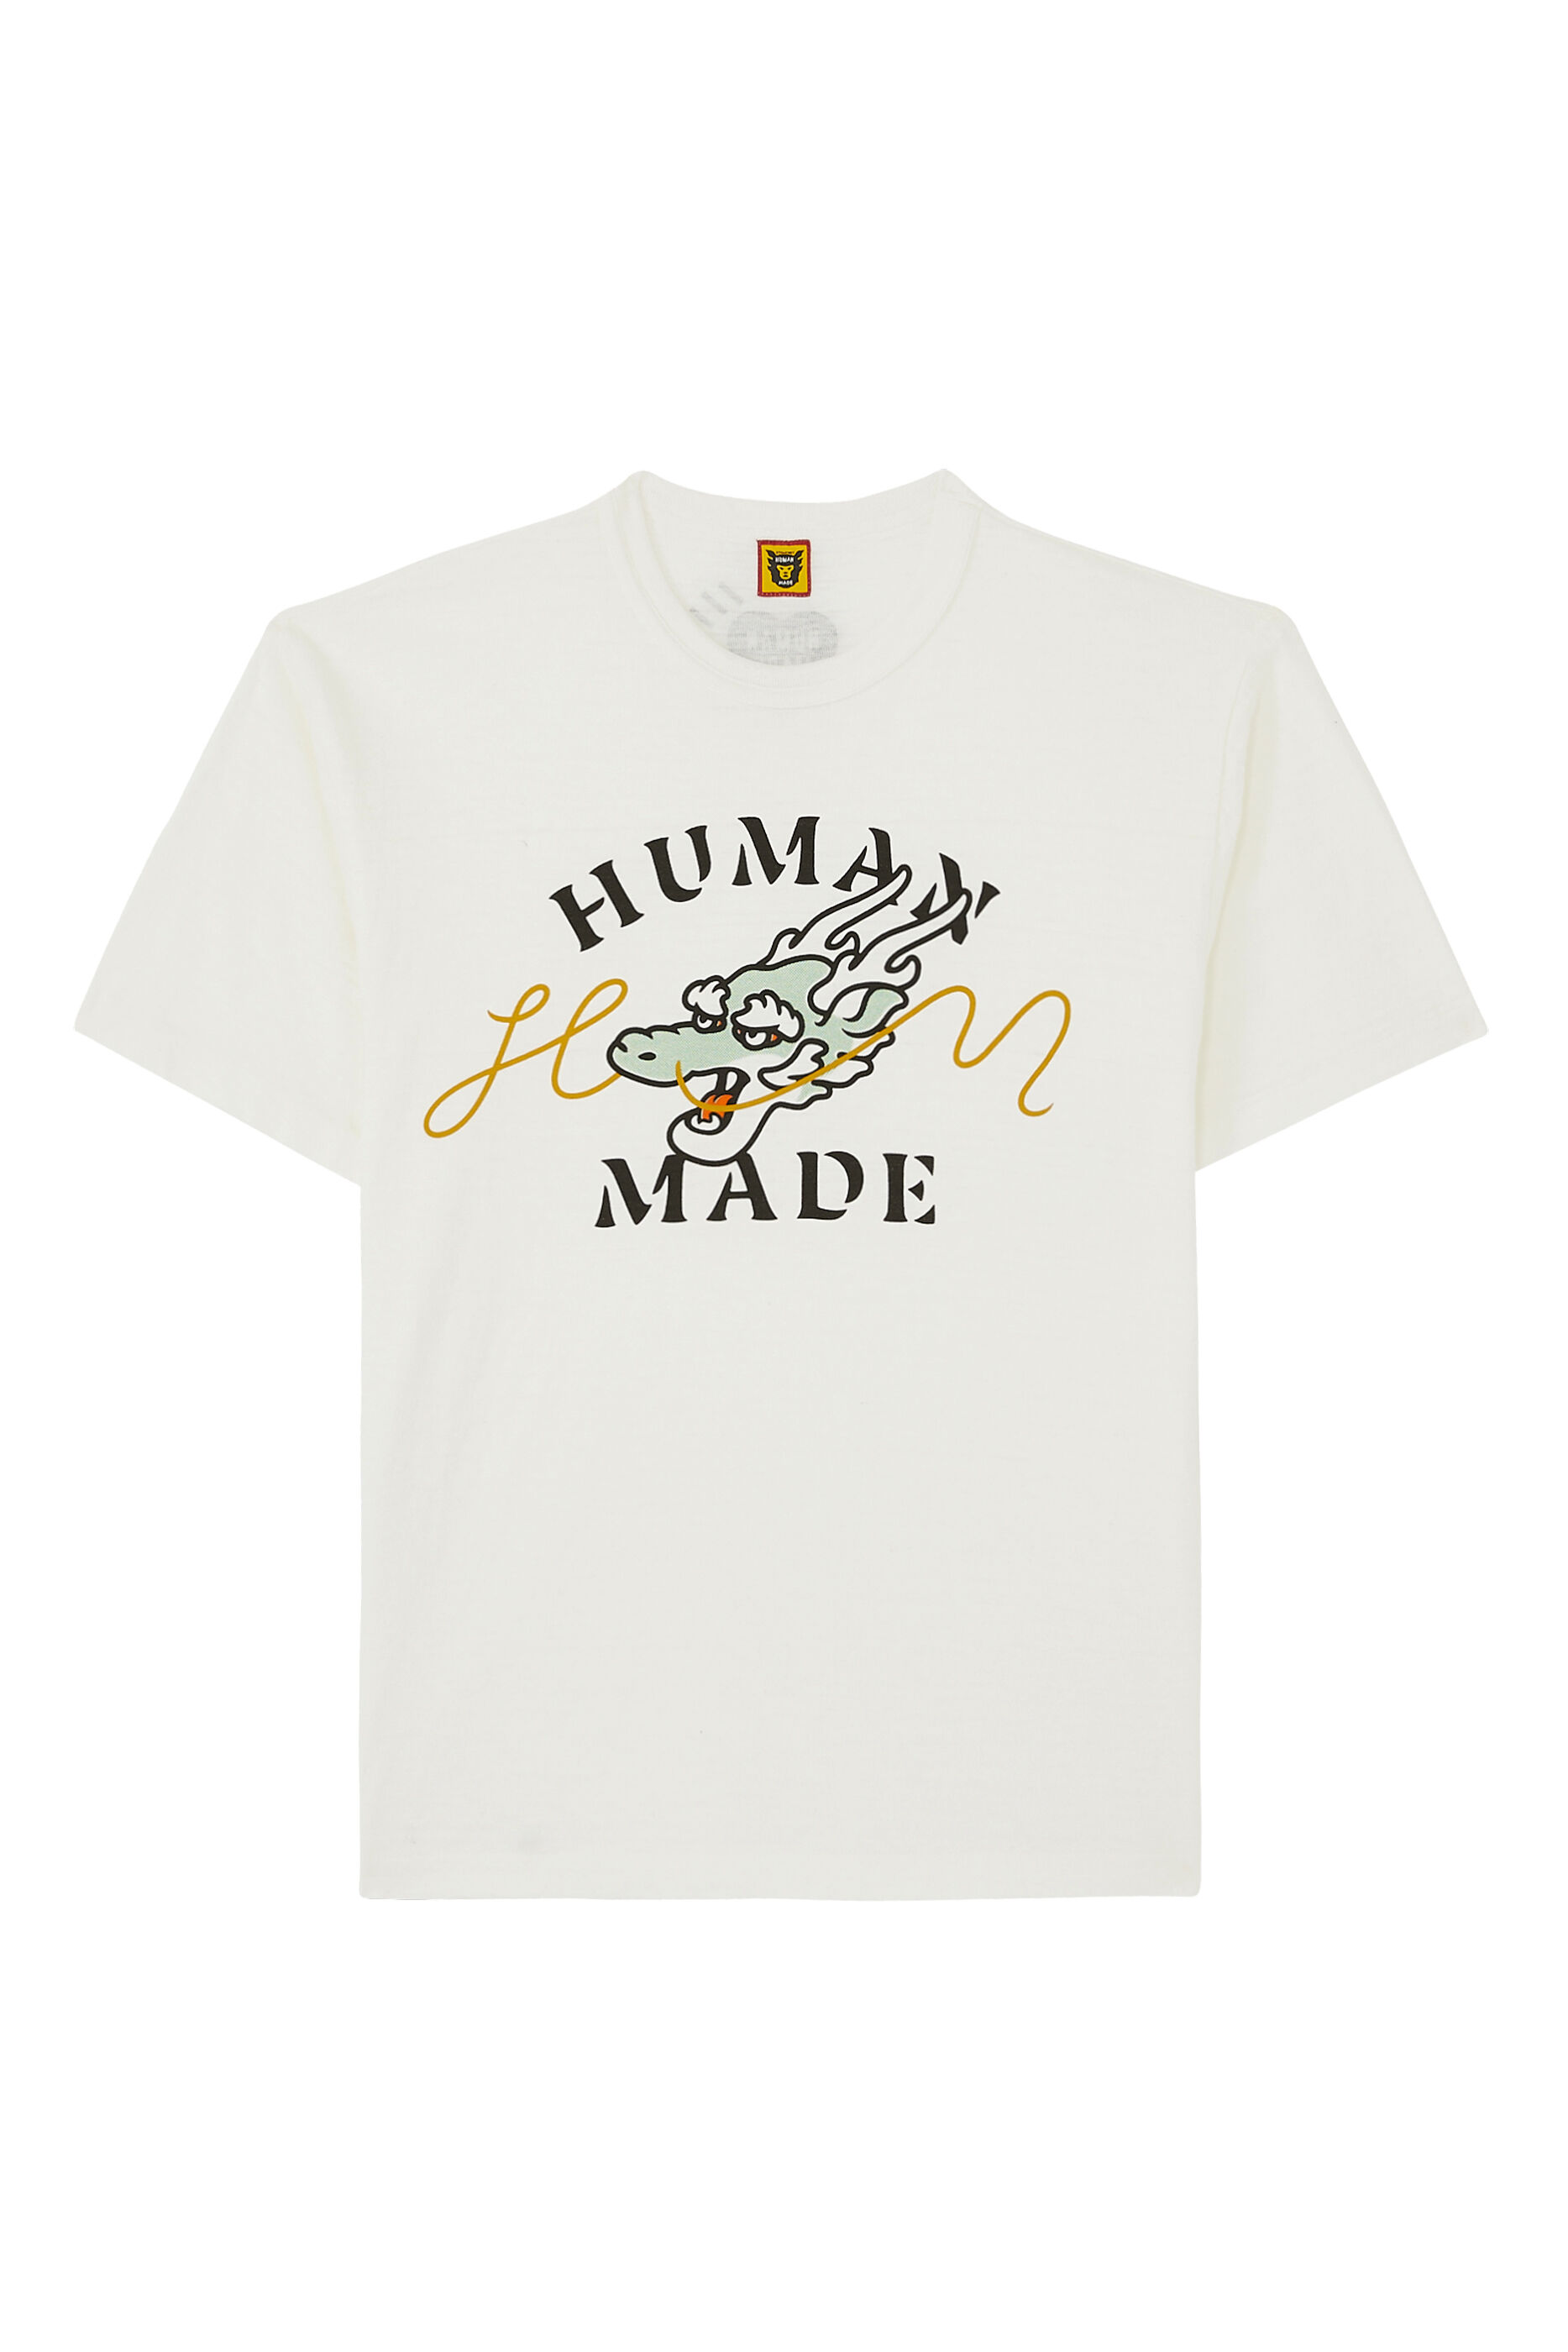 HUMAN MADE DRAGON graphic t-shirtメンズ